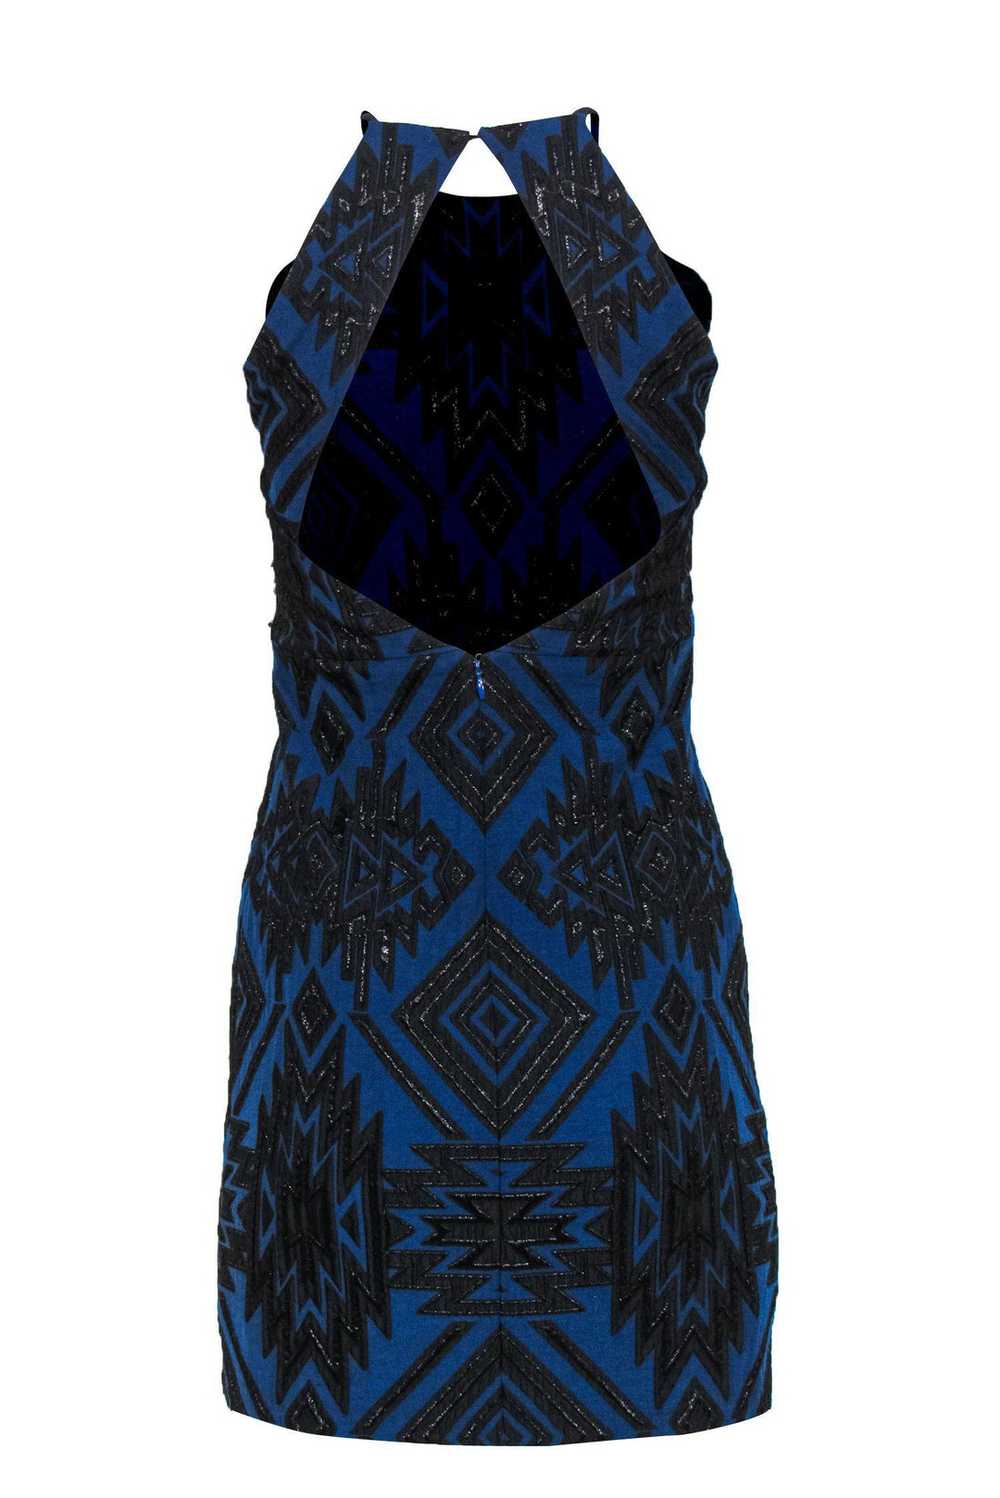 Parker - Blue & Black Aztec Print Sleeveless Shea… - image 3